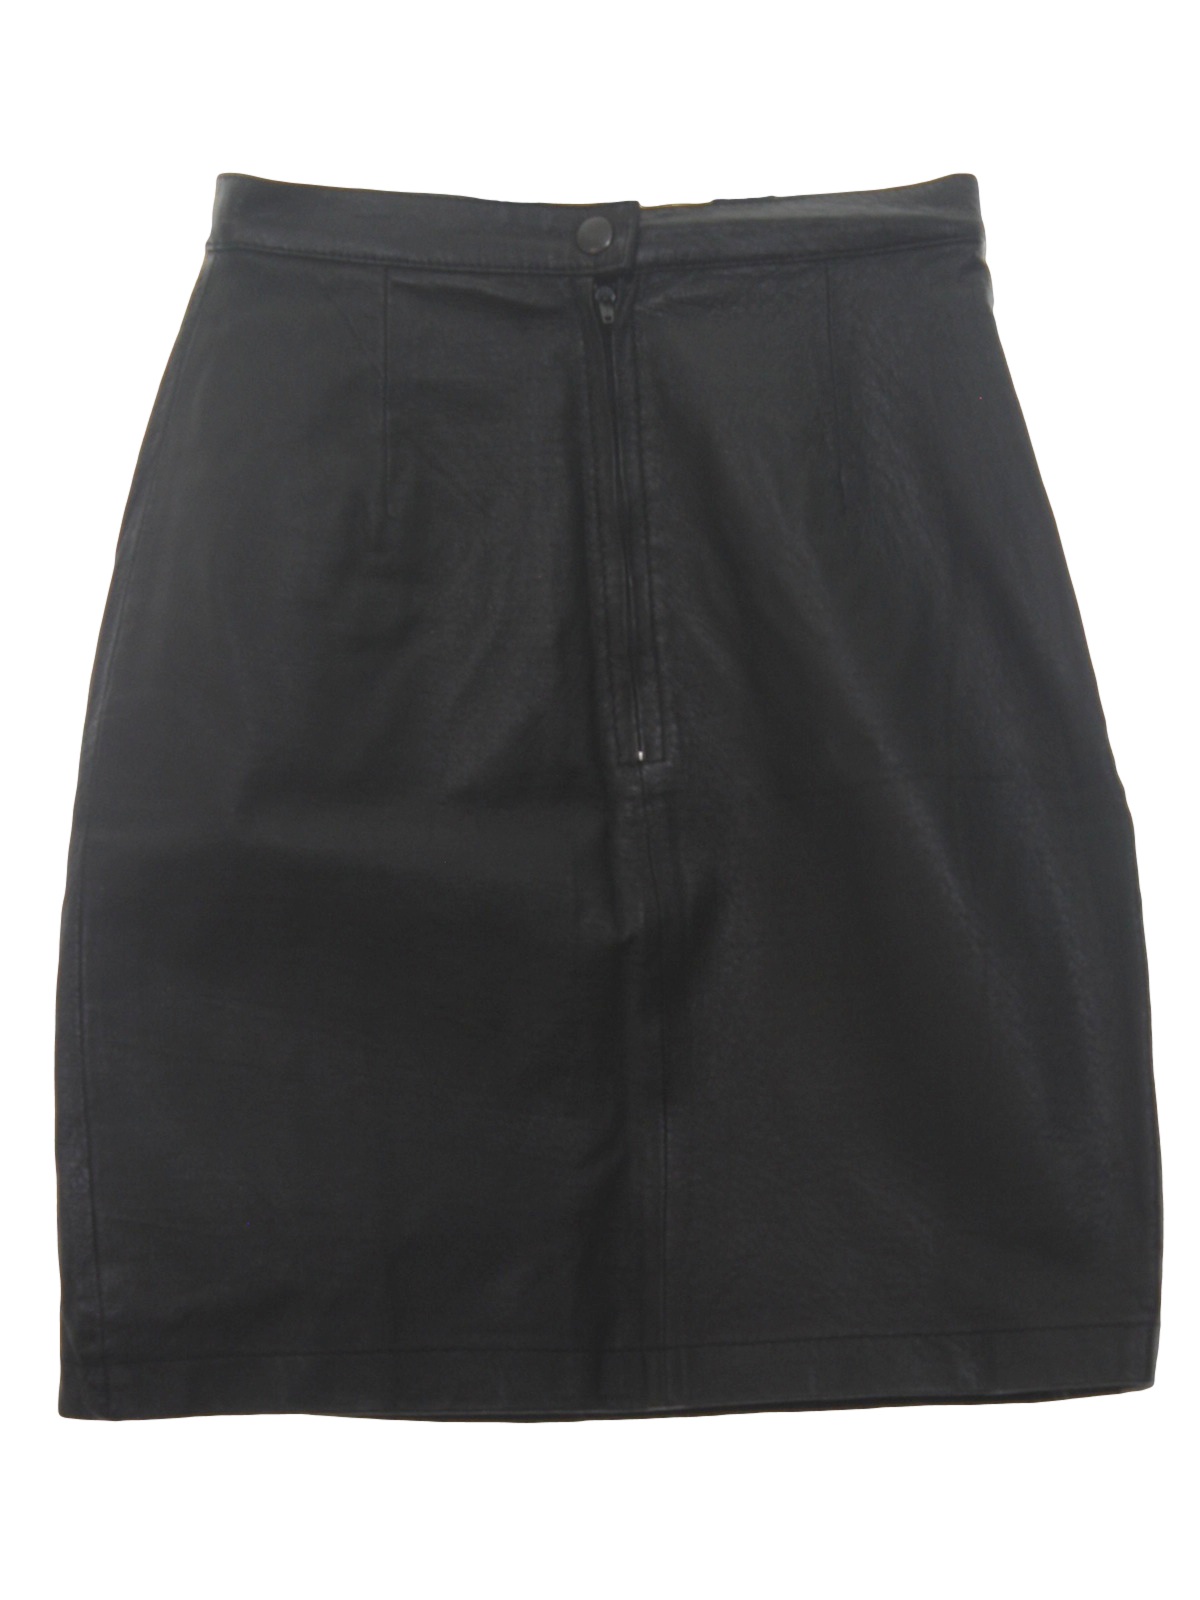 Retro 1980's Mini Skirt (Wilsons Leathers) : 80s -Wilsons Leathers ...